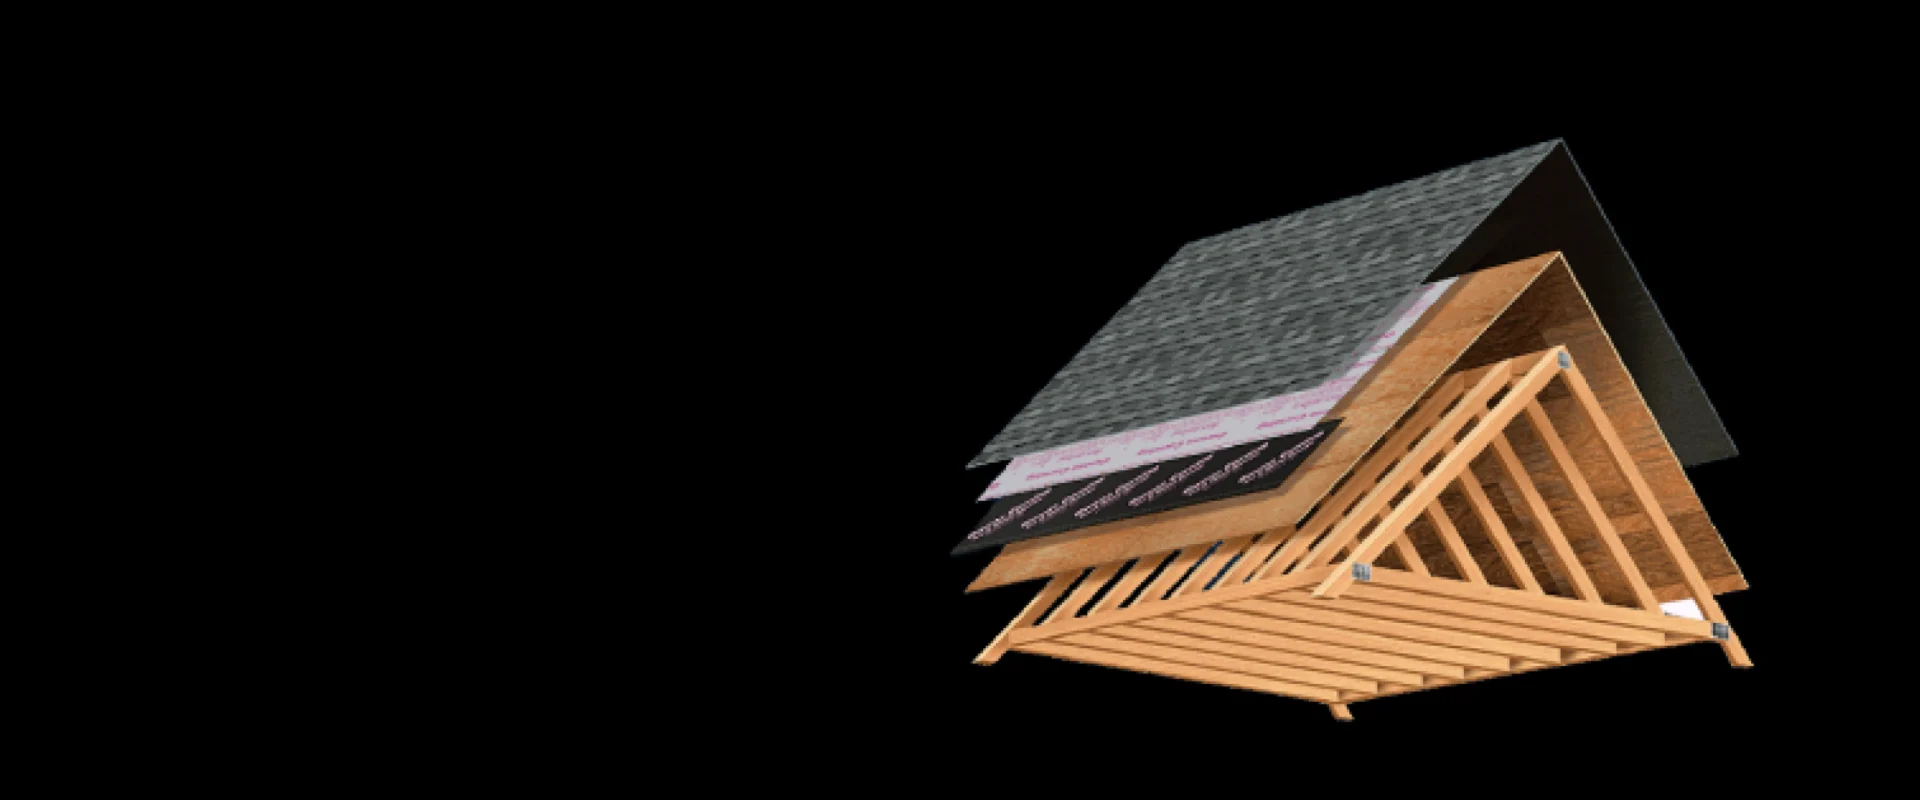 roof materials illustration 2